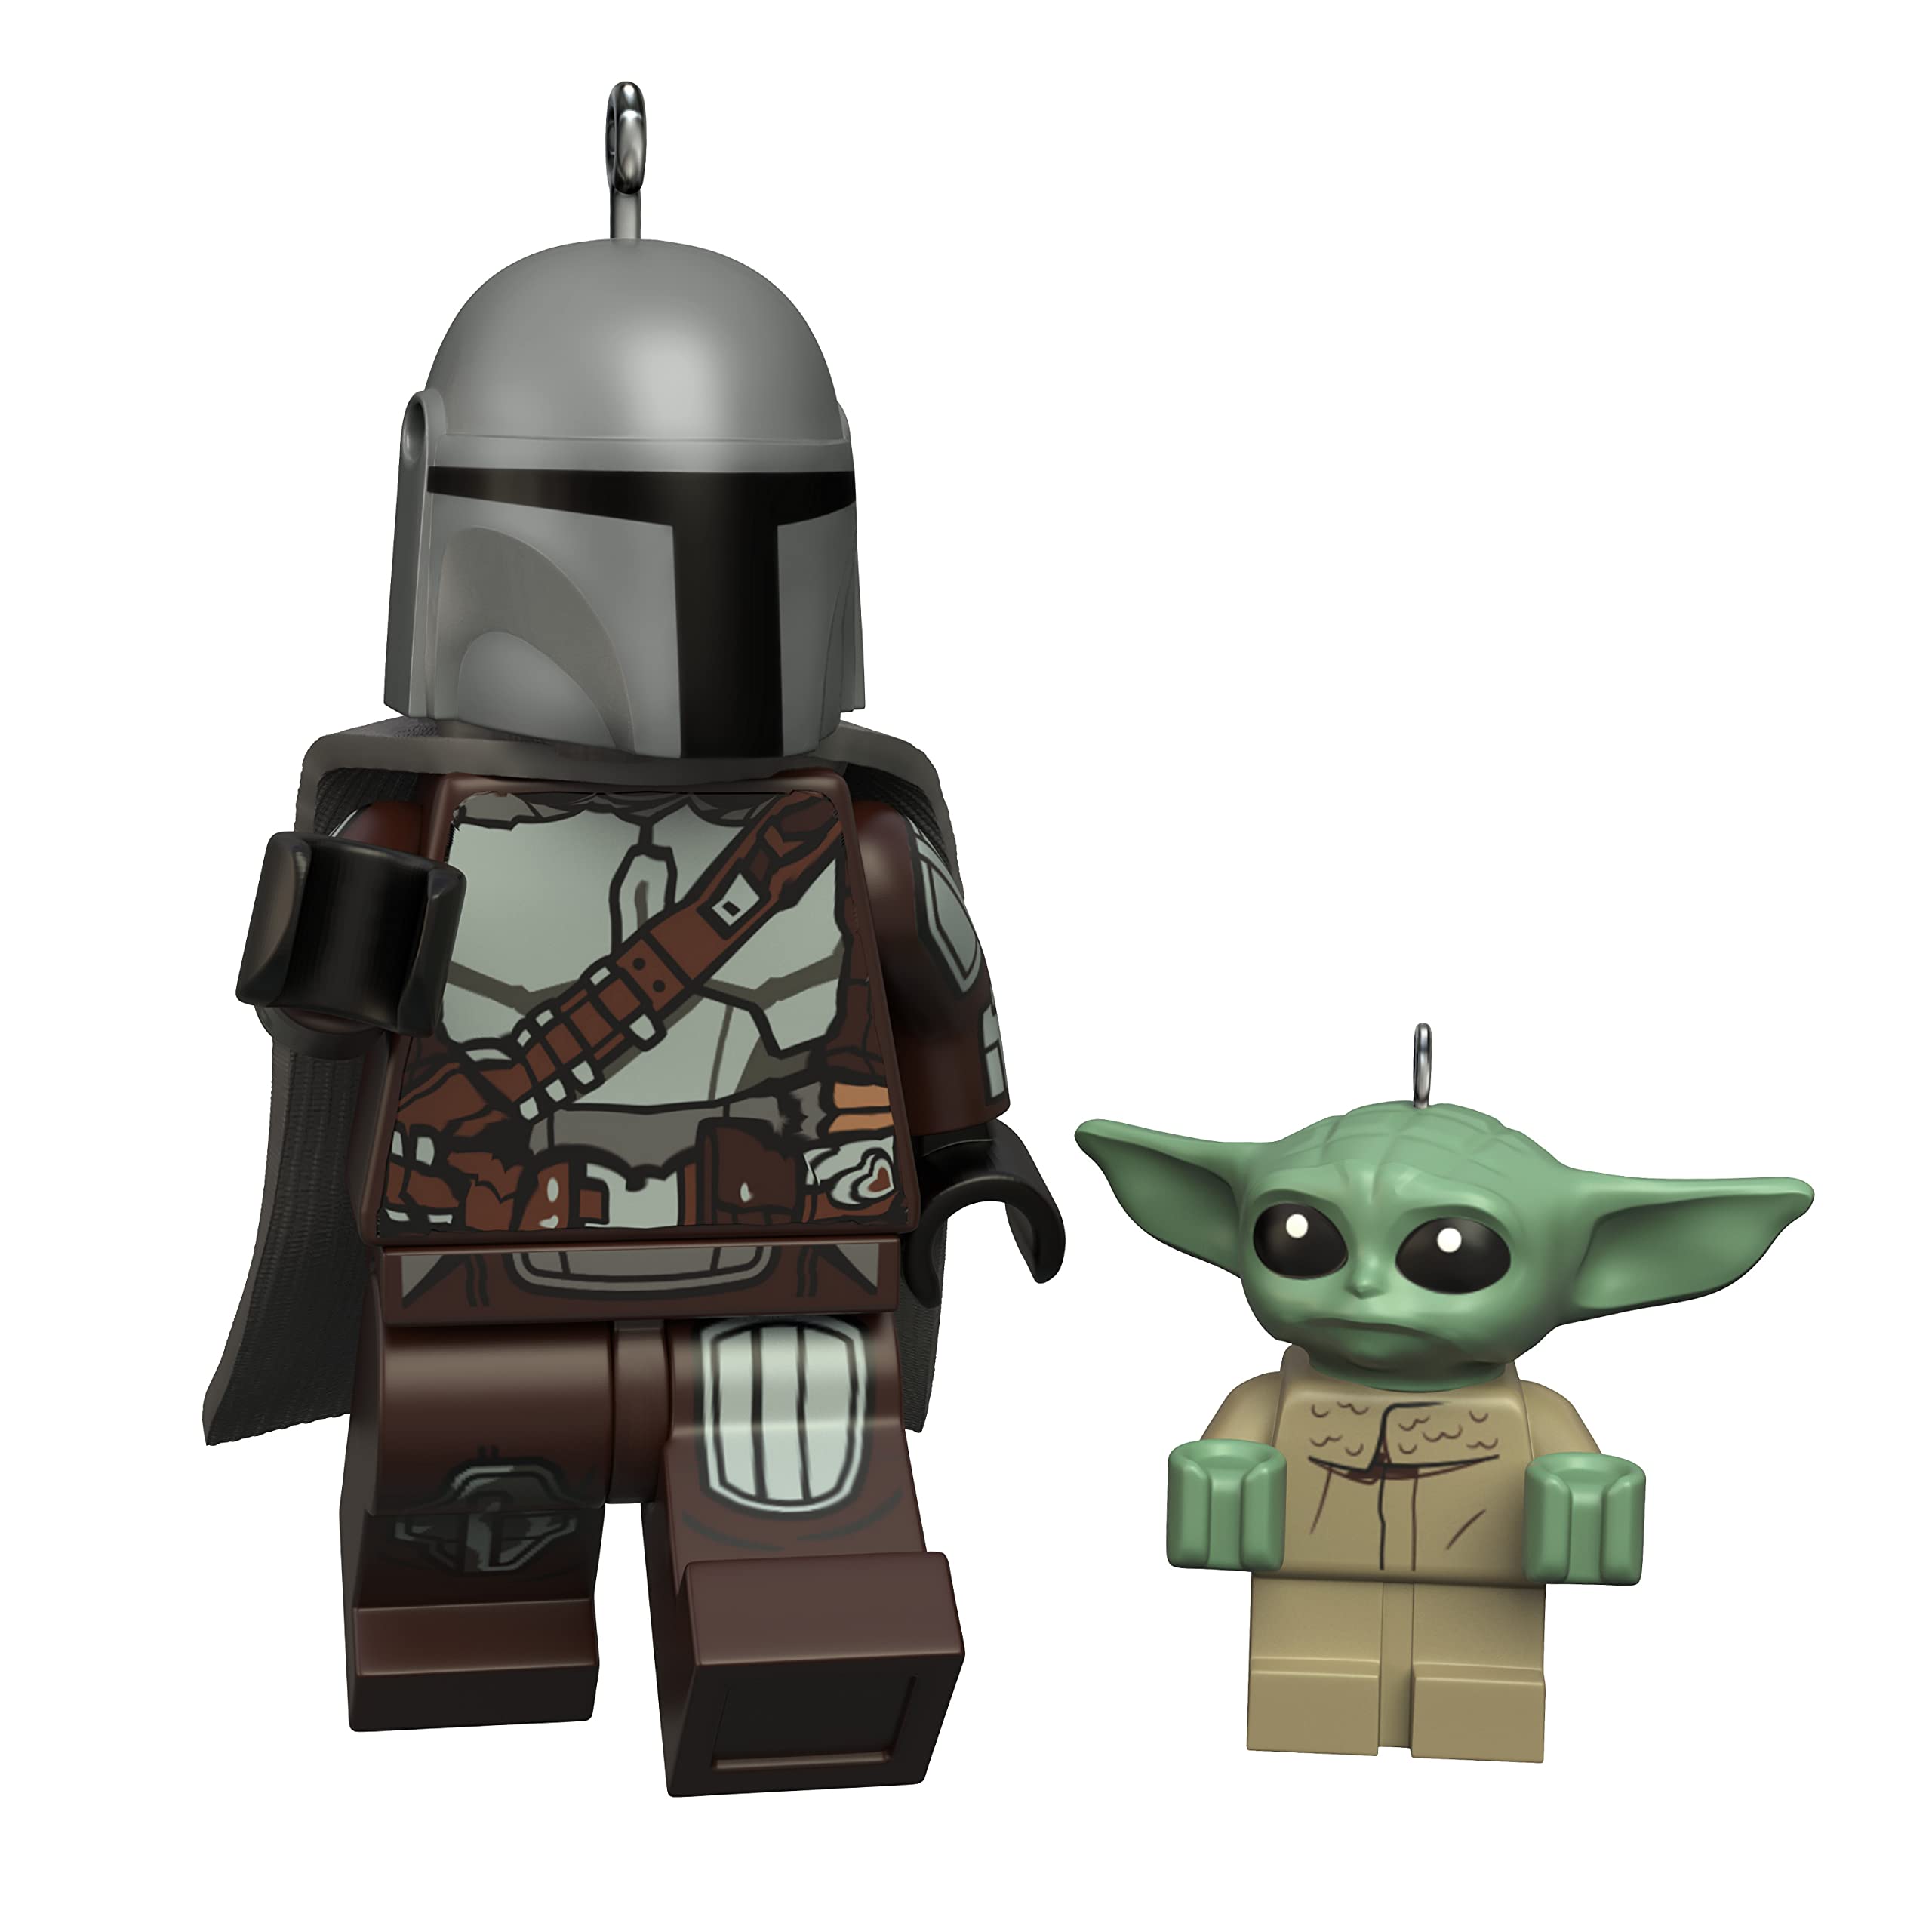 Hallmark Keepsake Christmas Ornaments 2023, The Mandalorian and Grogu Lego Star Wars Minifigure, Set of 2, Gifts for Star Wars Fans